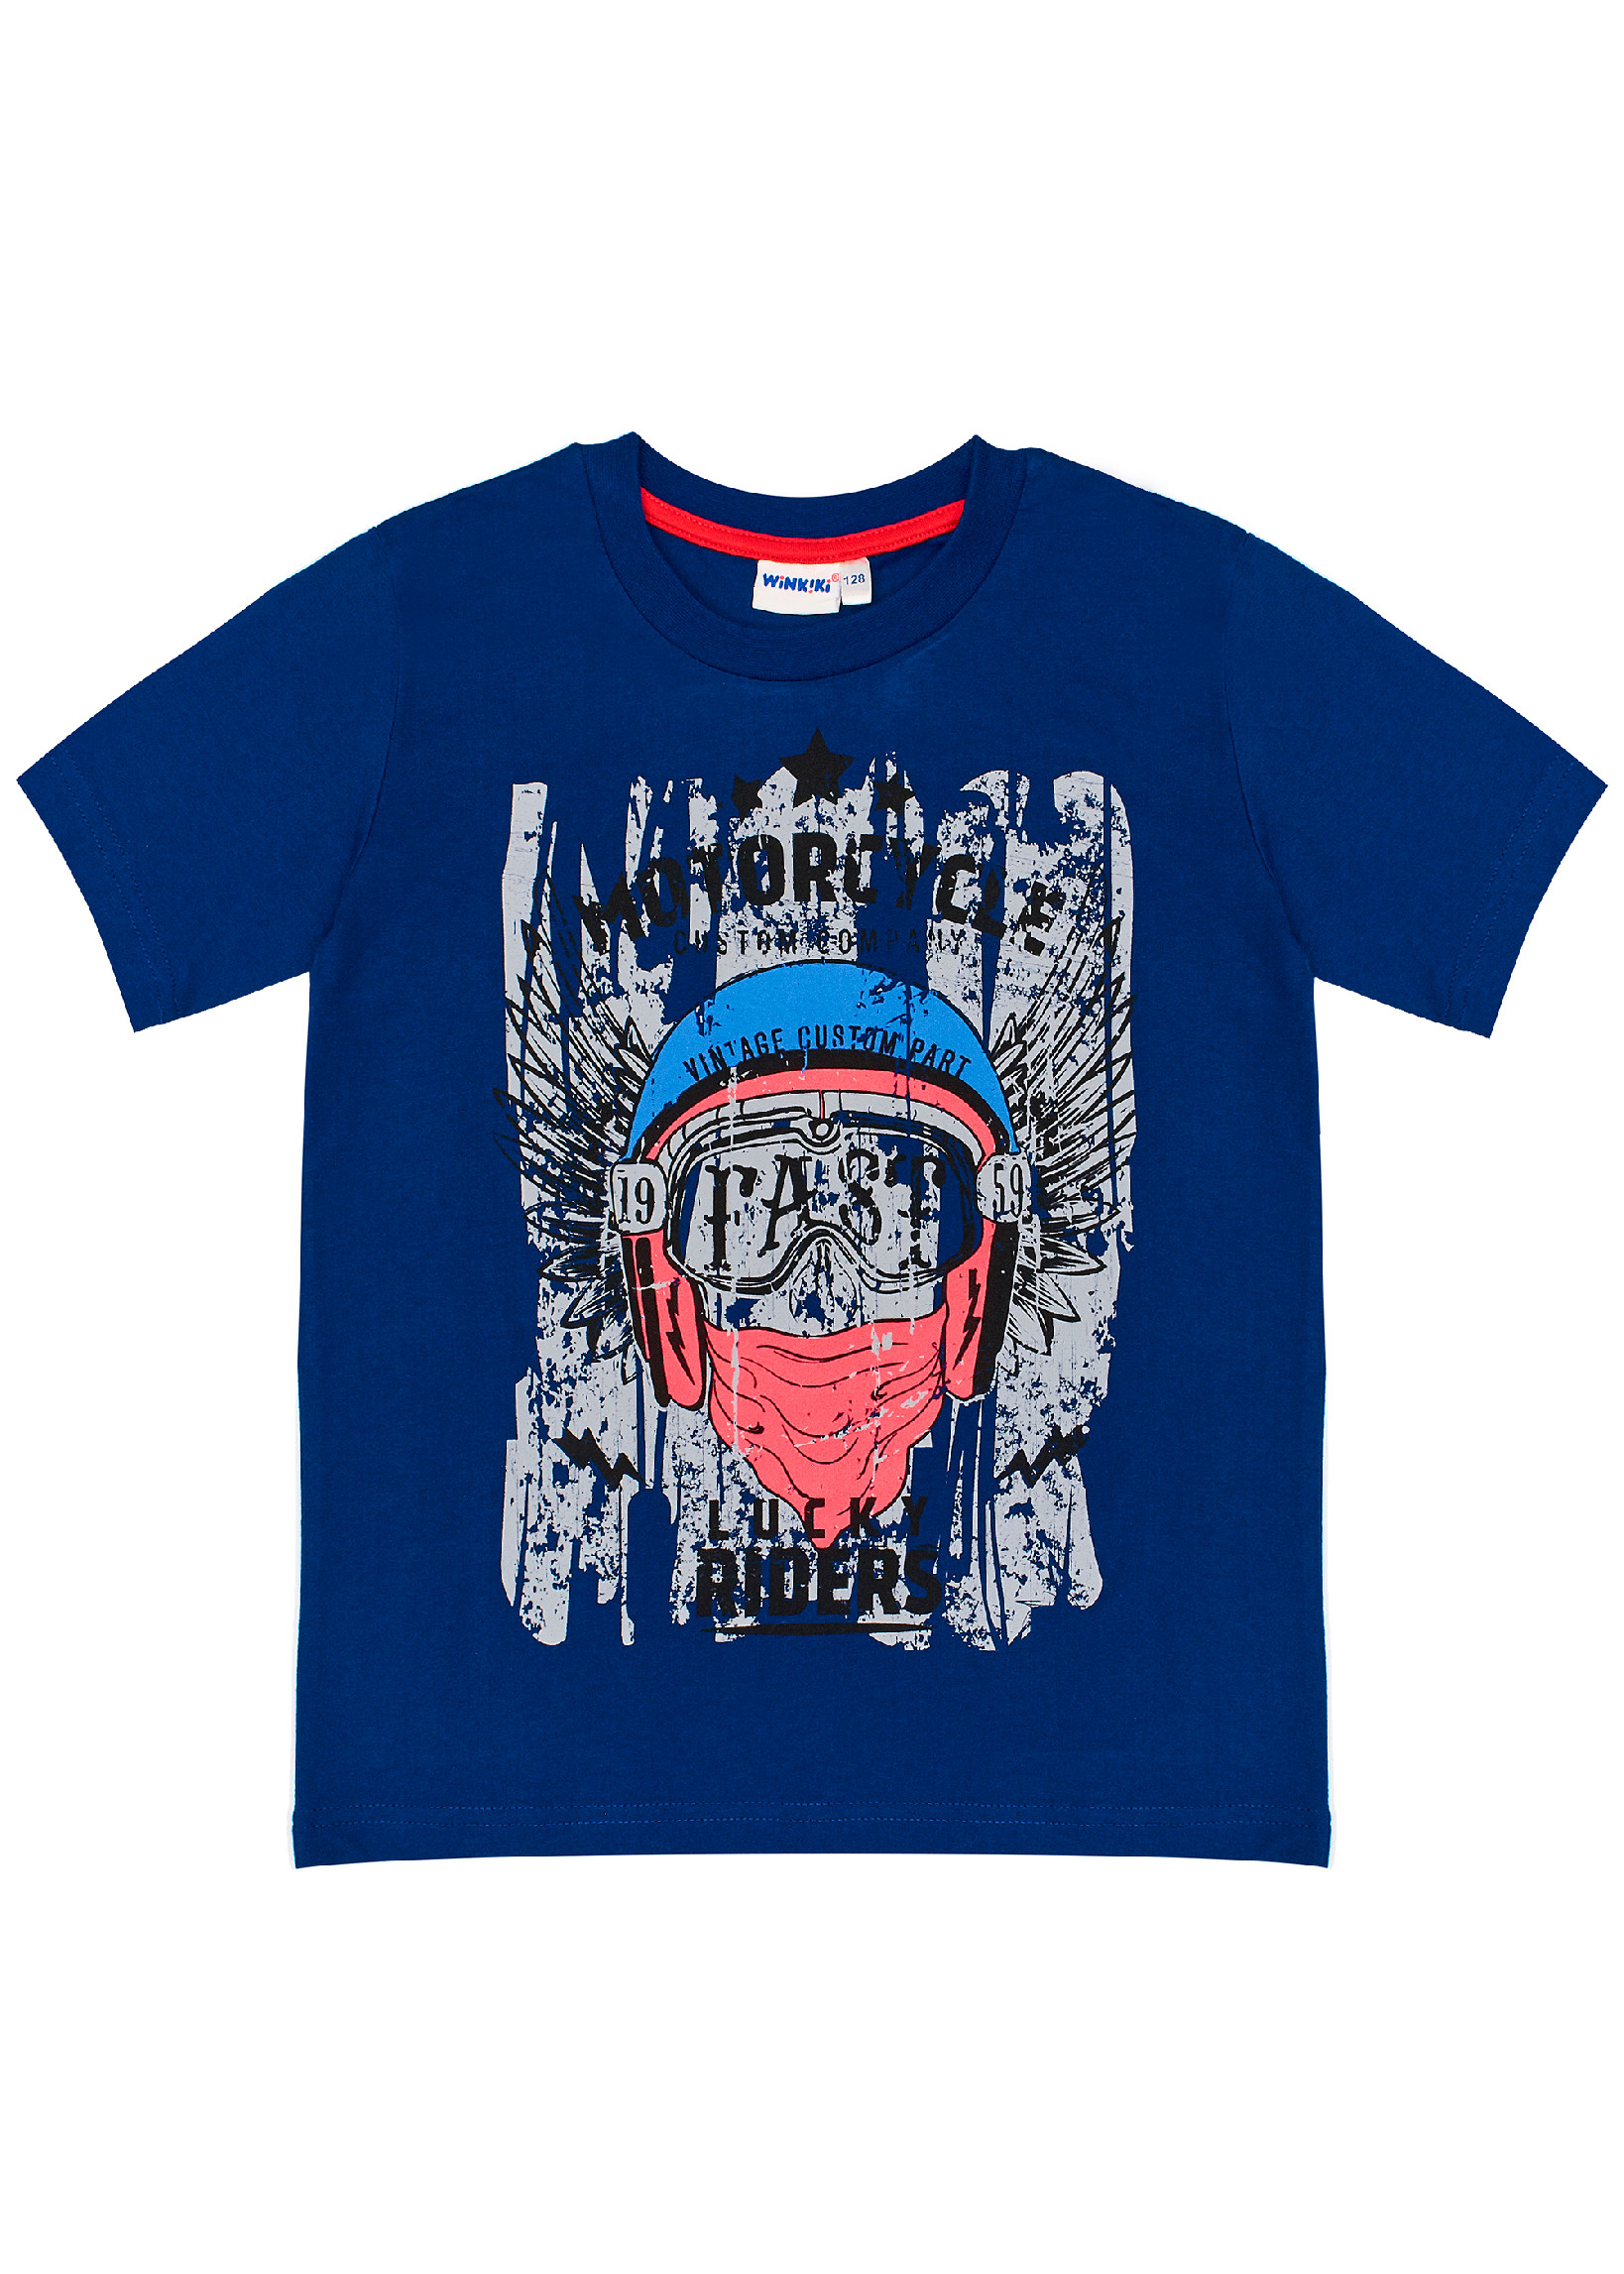 Chlapecké triko - Winkiki WJB 91380, tmavě modrá Barva: Modrá, Velikost: 128